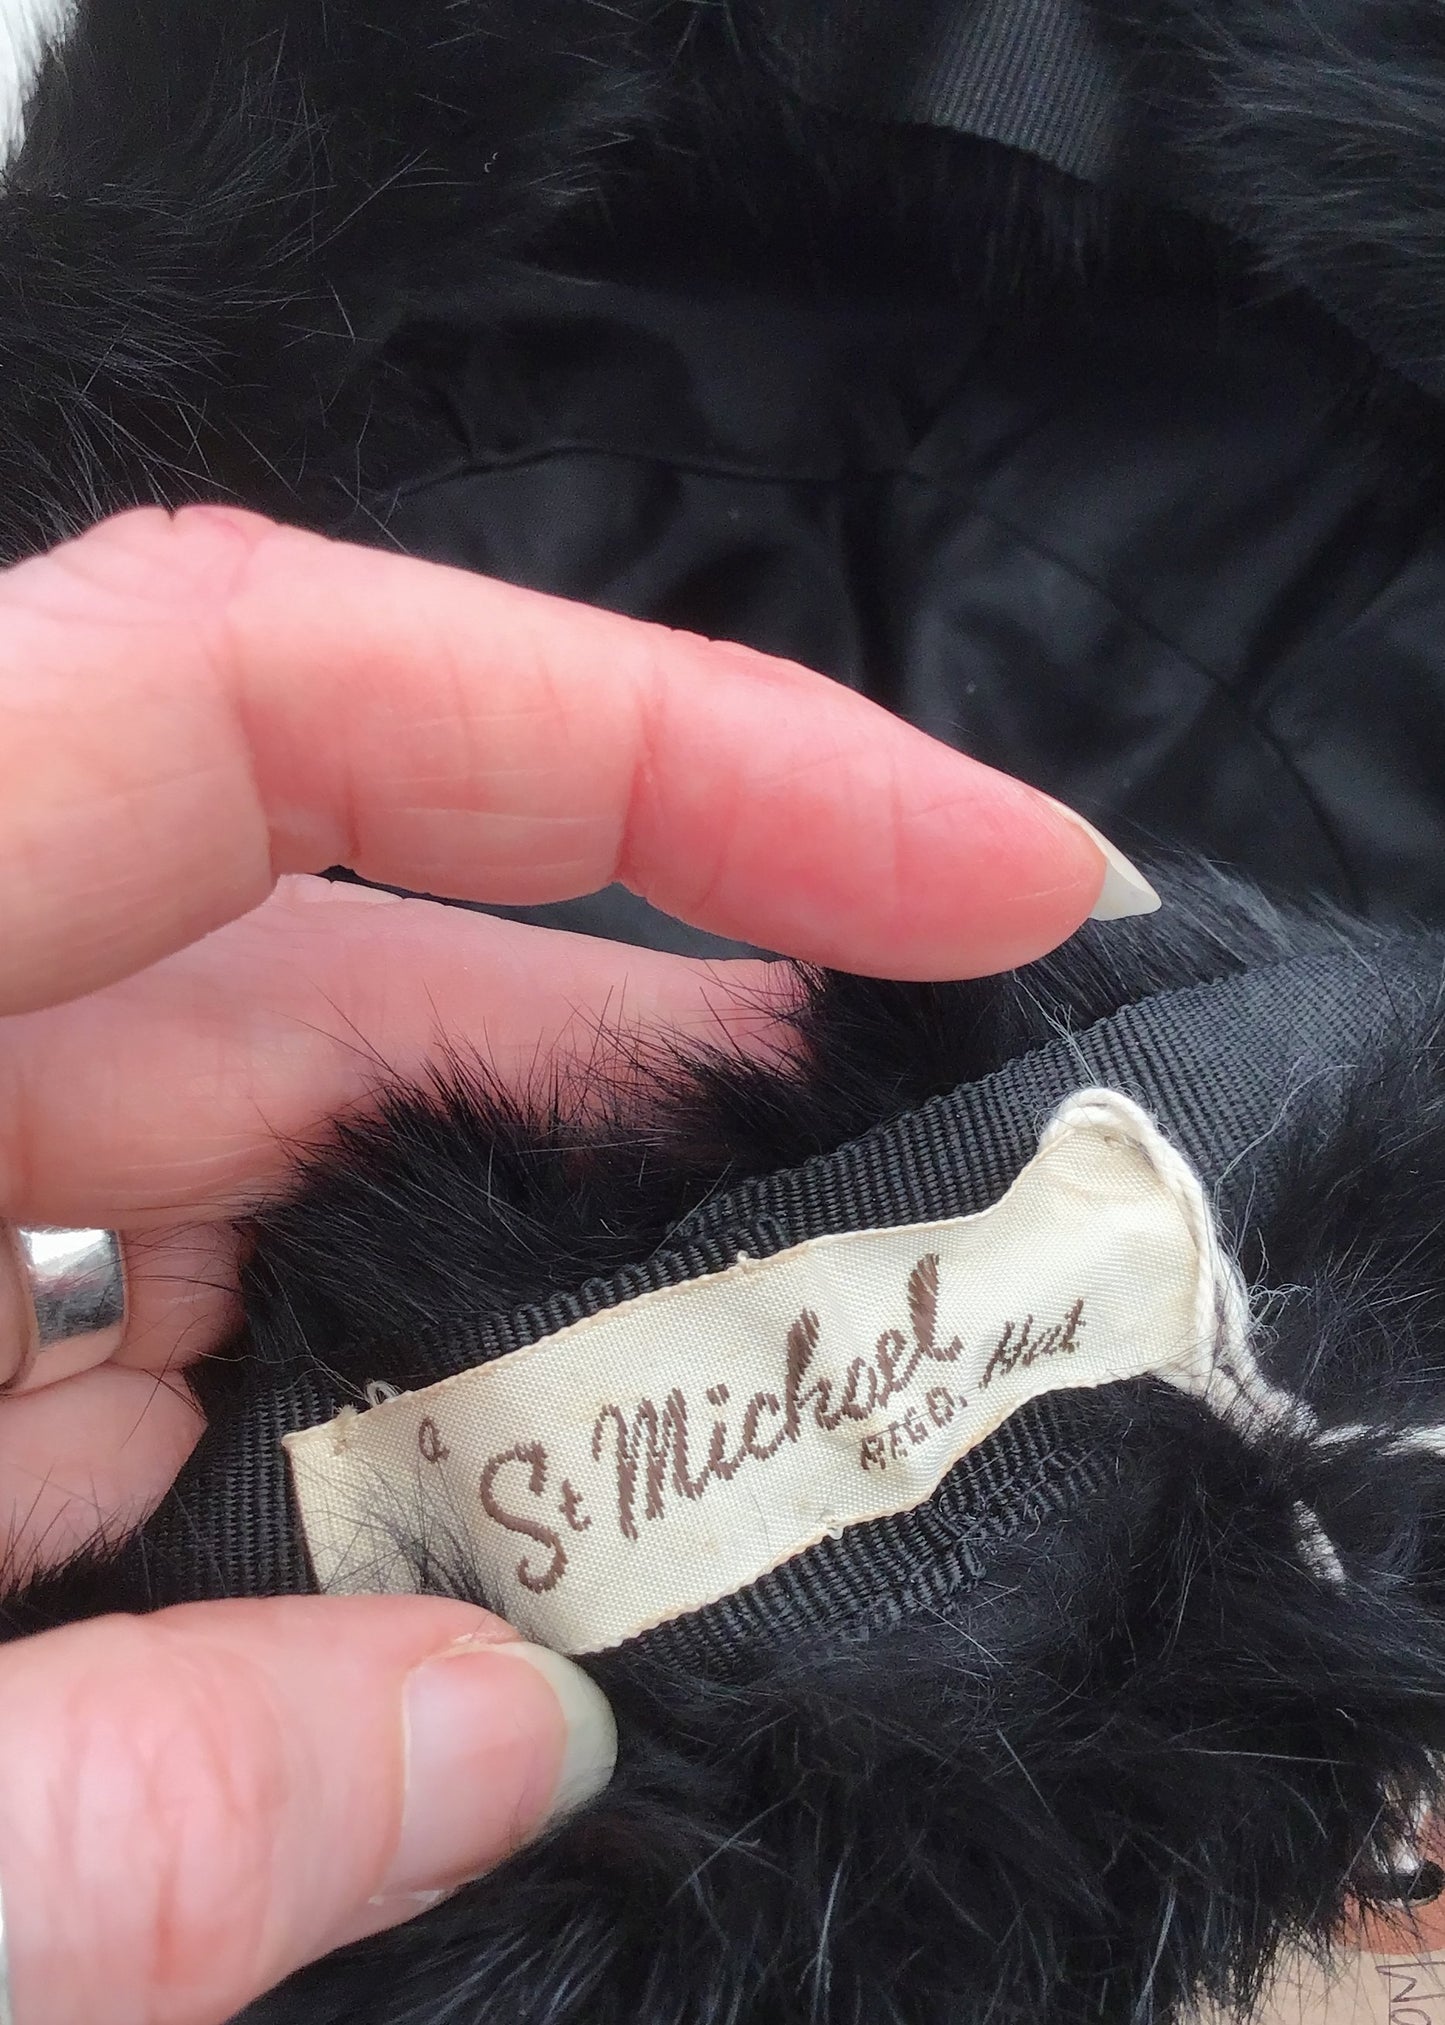 Vintage St Michael Black Rabbit Fur Pillbox Style Hat